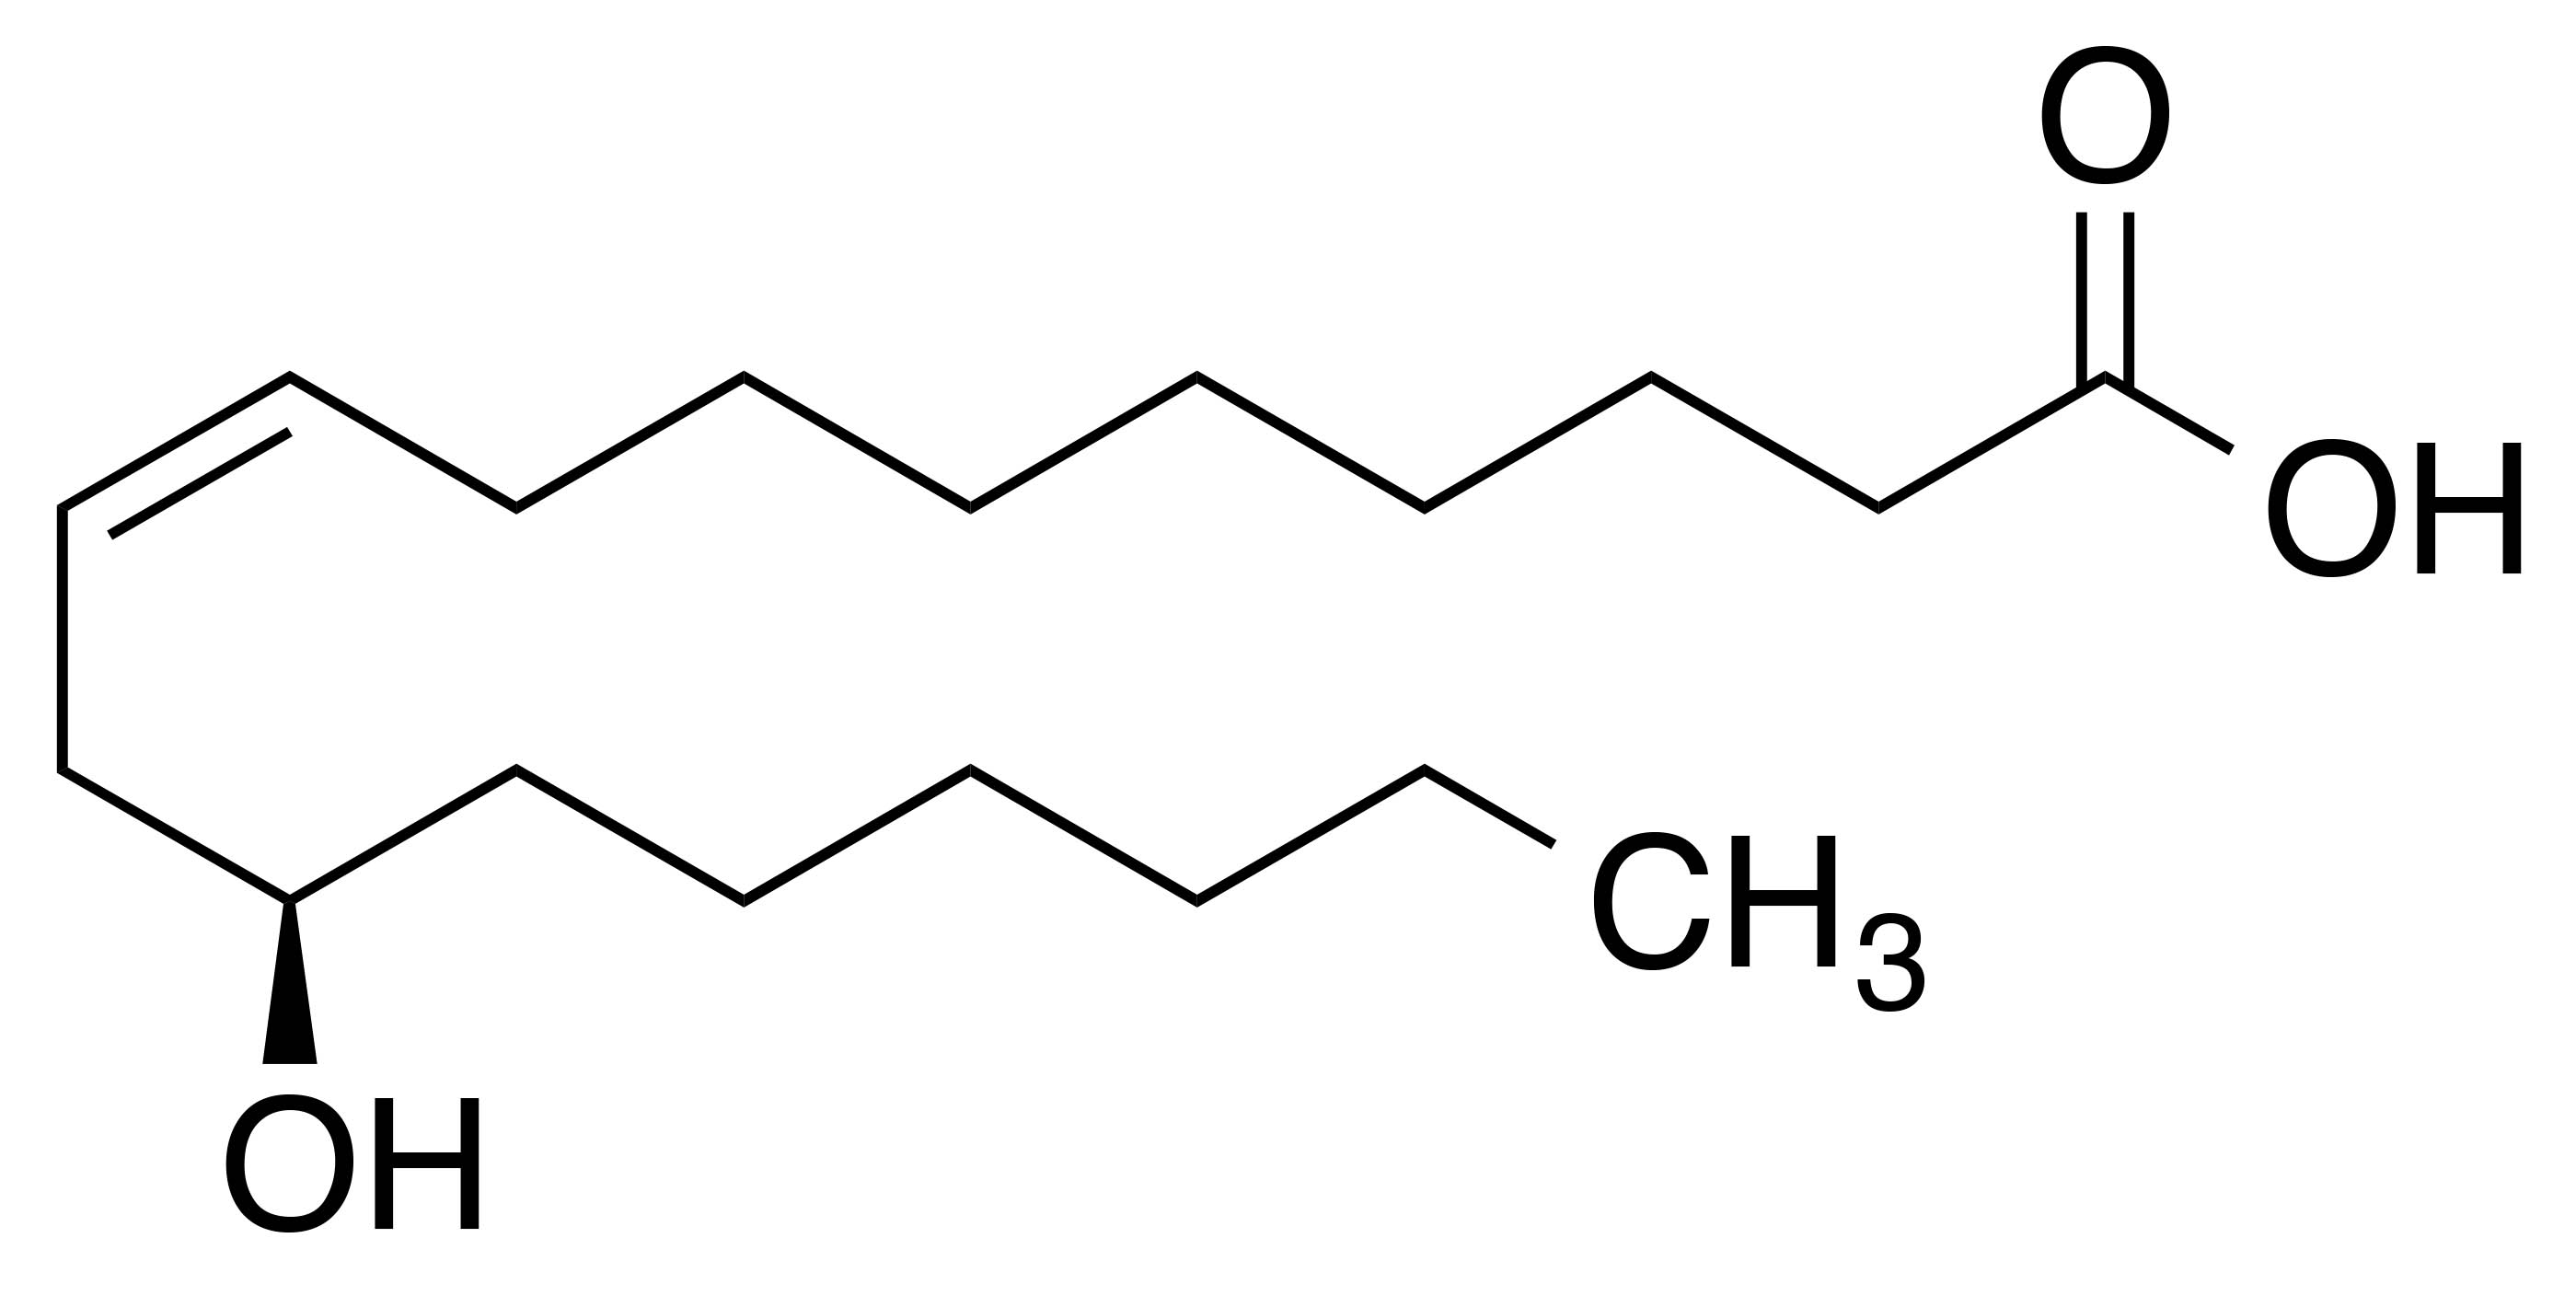 molecular structure of ricinoleic acid